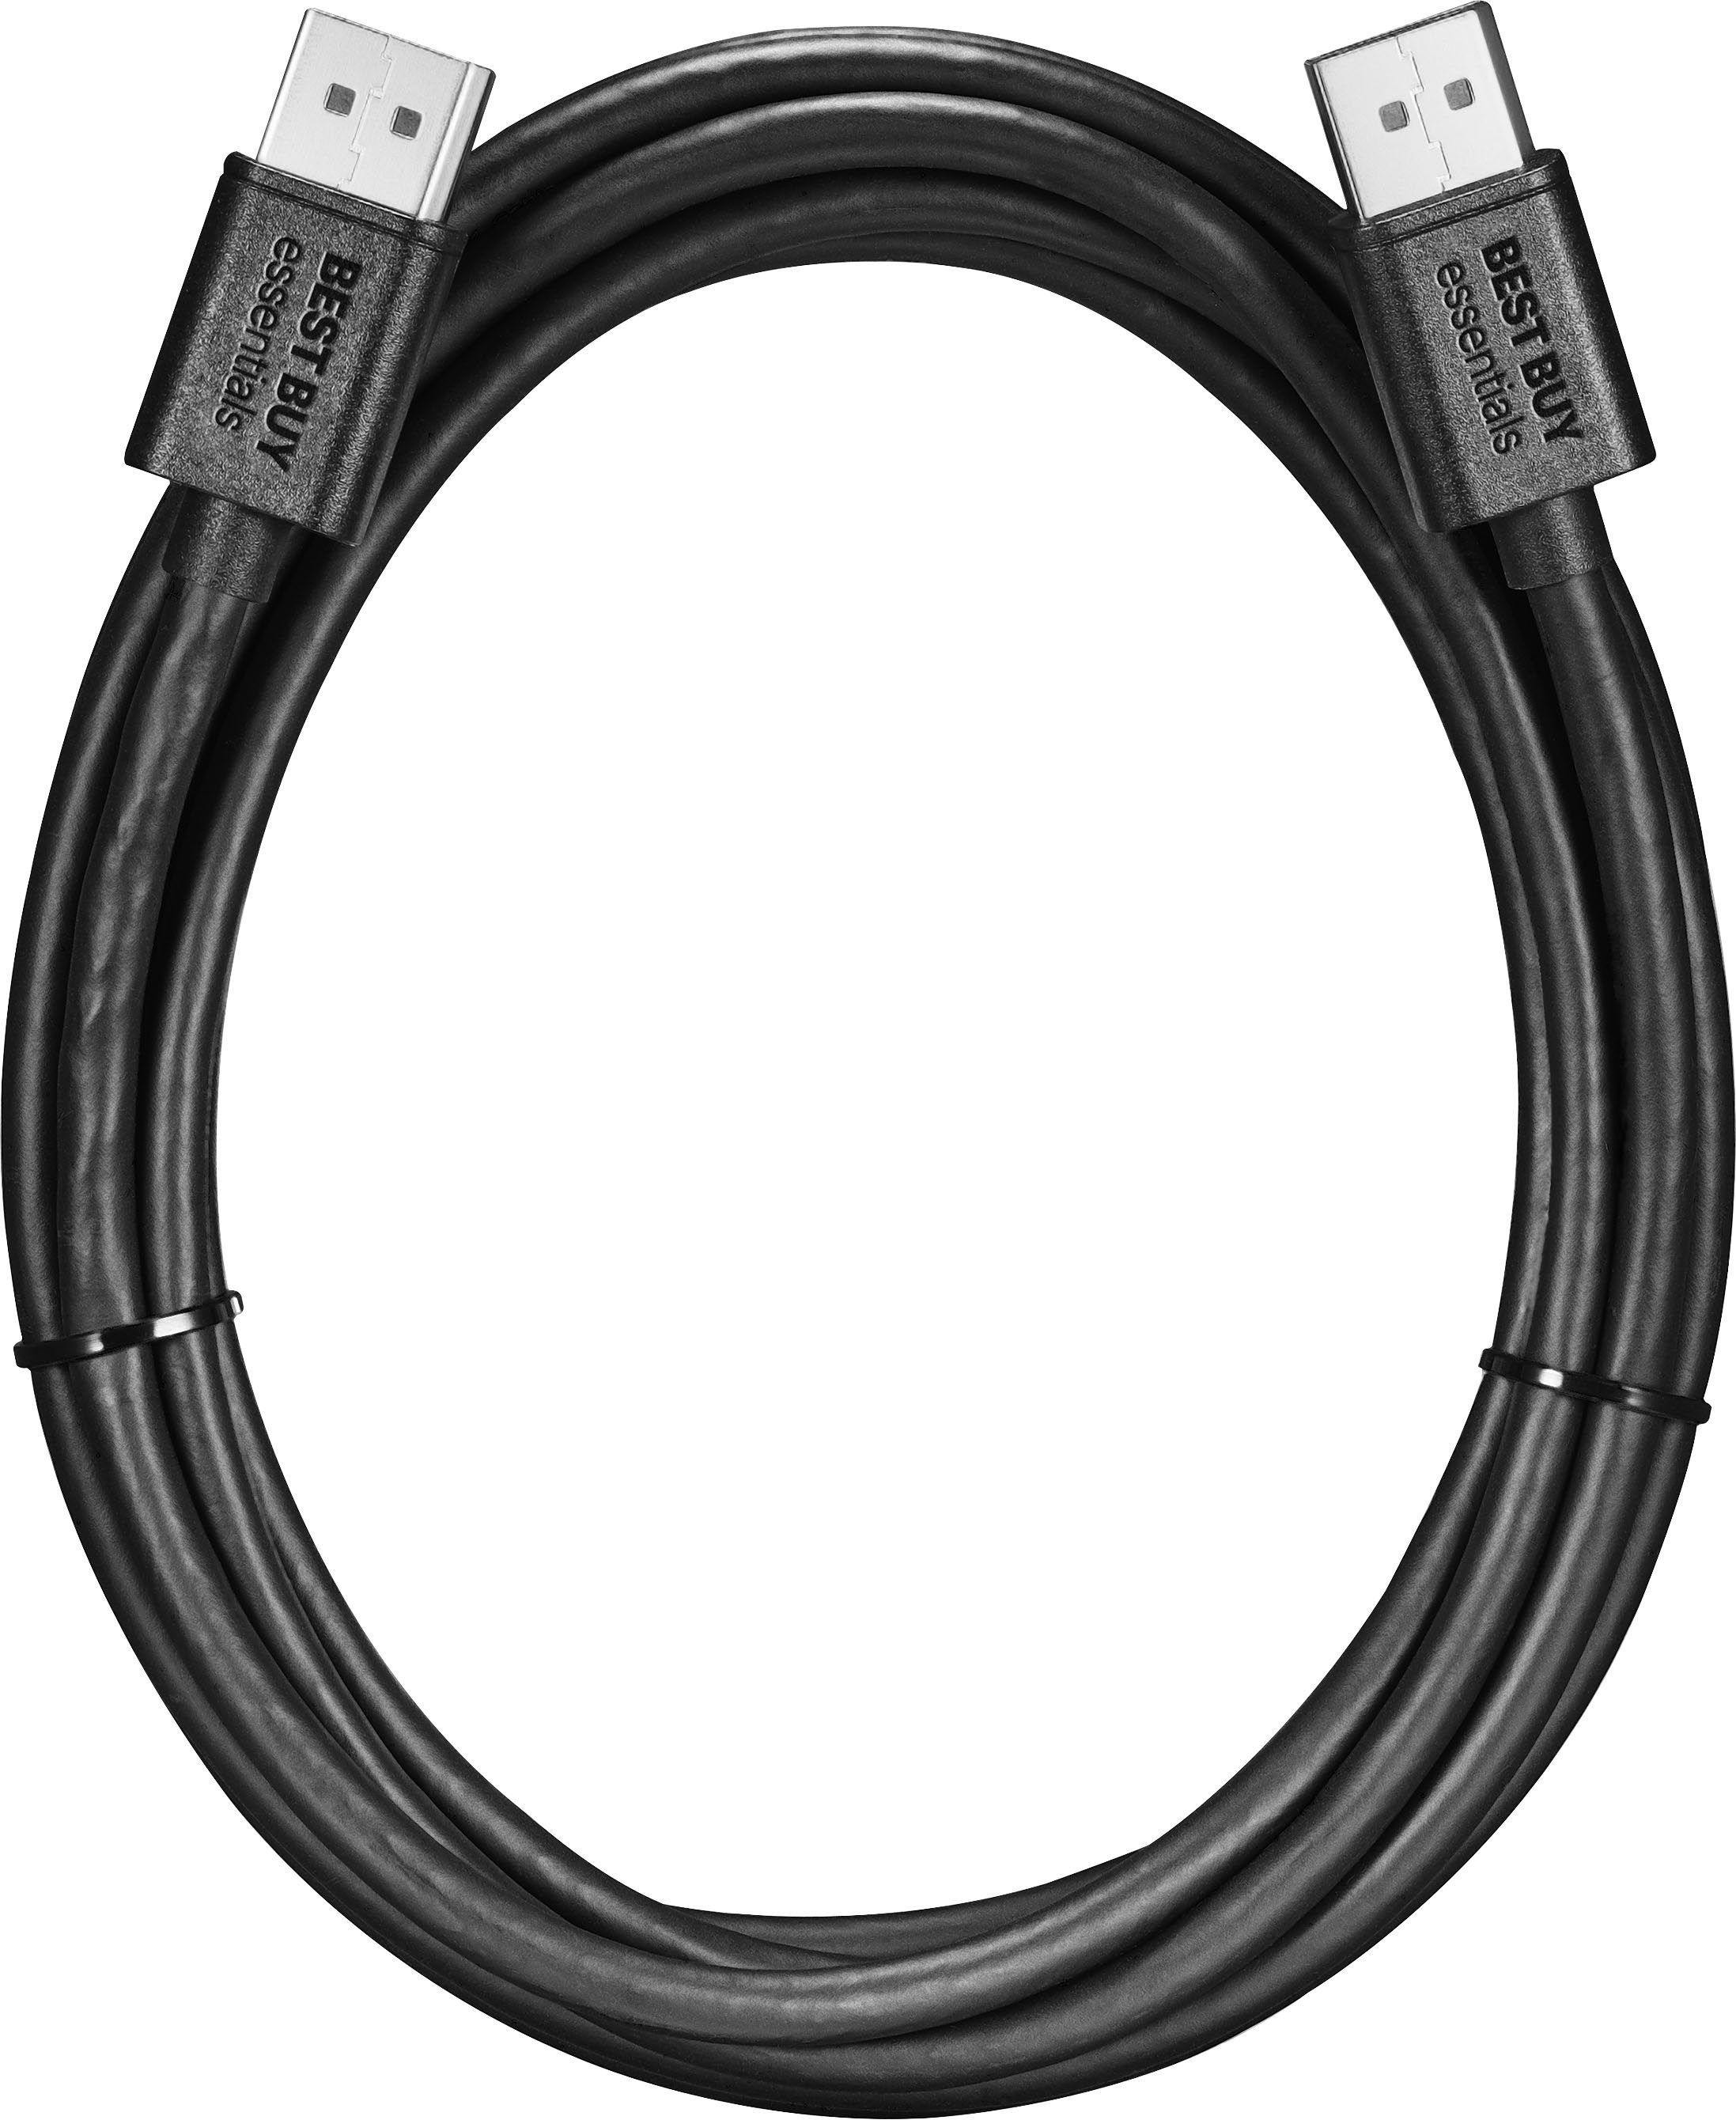 Best Buy Essentials - 10' DisplayPort Cable - Black